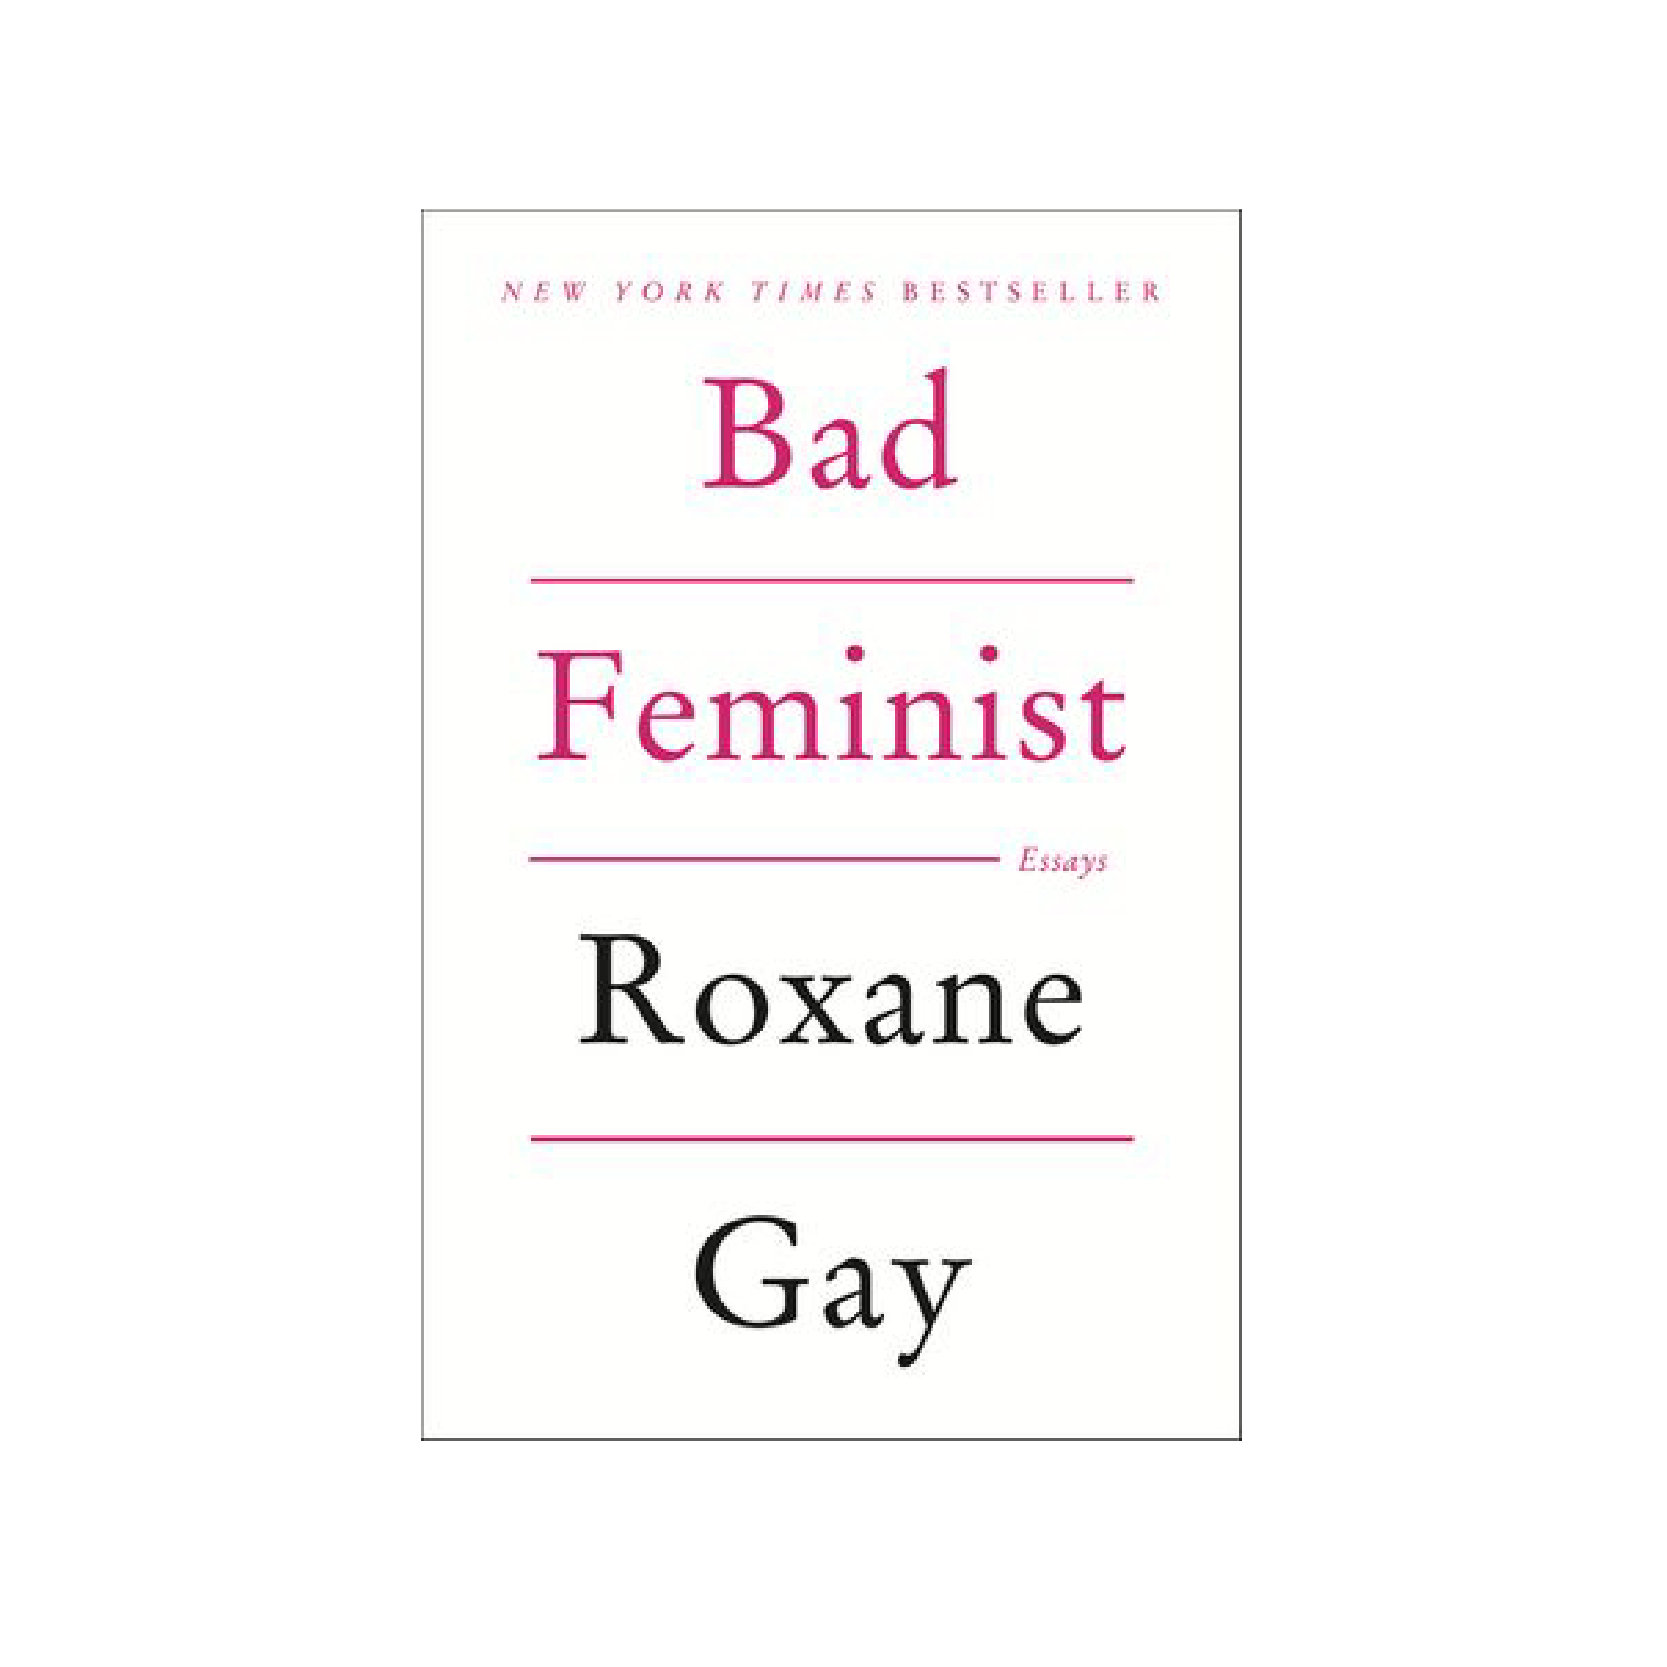 “Bad Feminist” by Roxane Gay